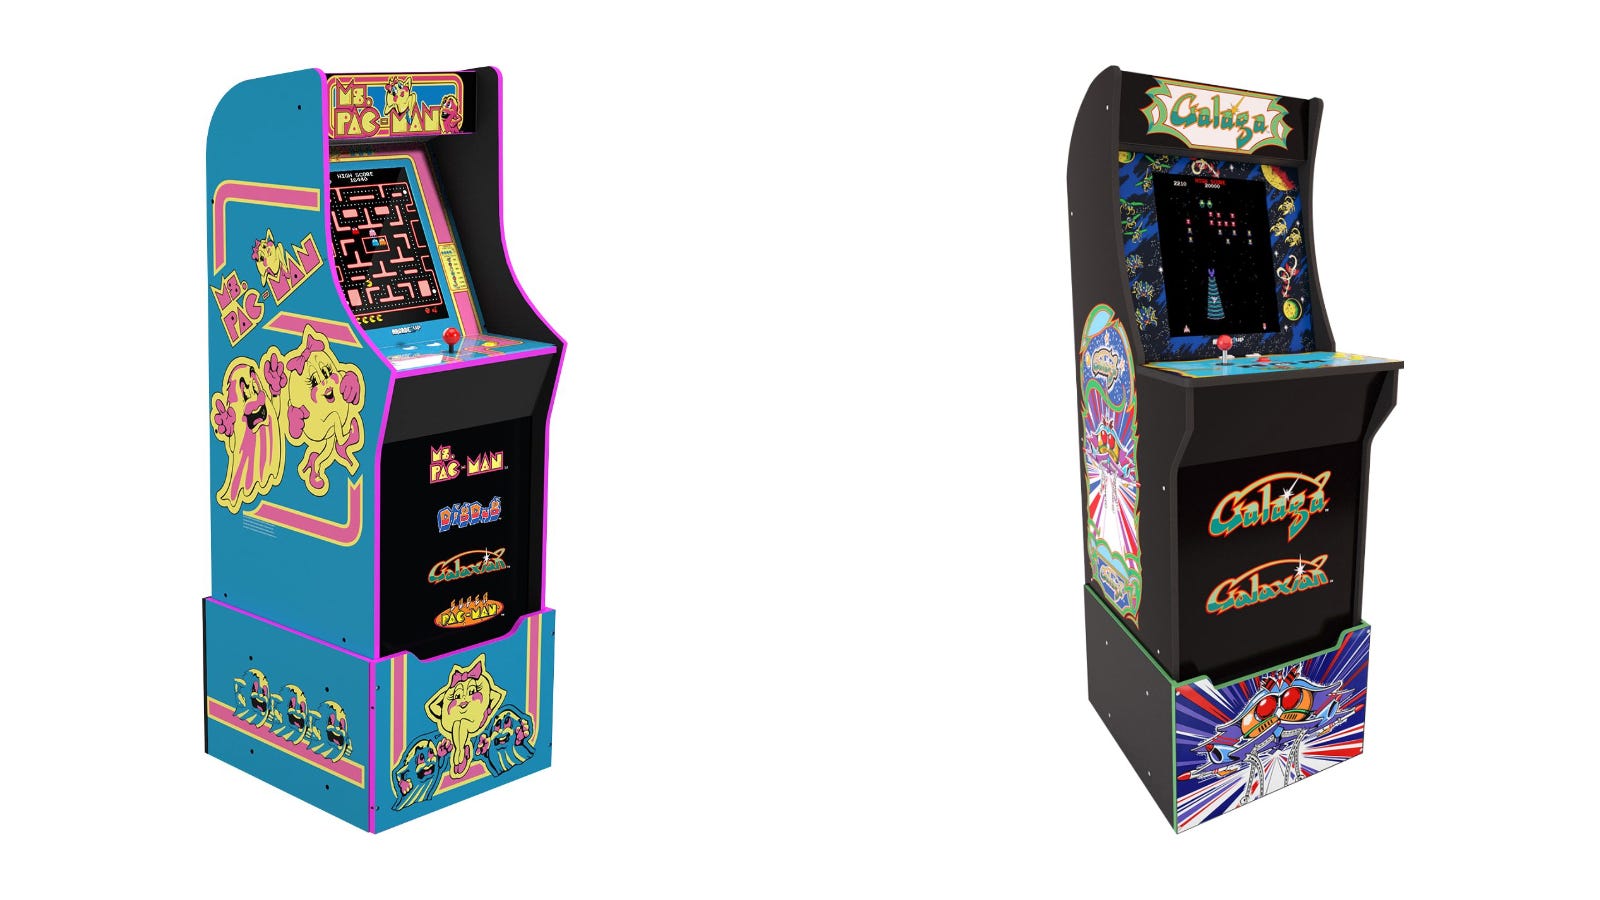 MS. Kabinet Pac-Man dan Galaga Arcade1Up